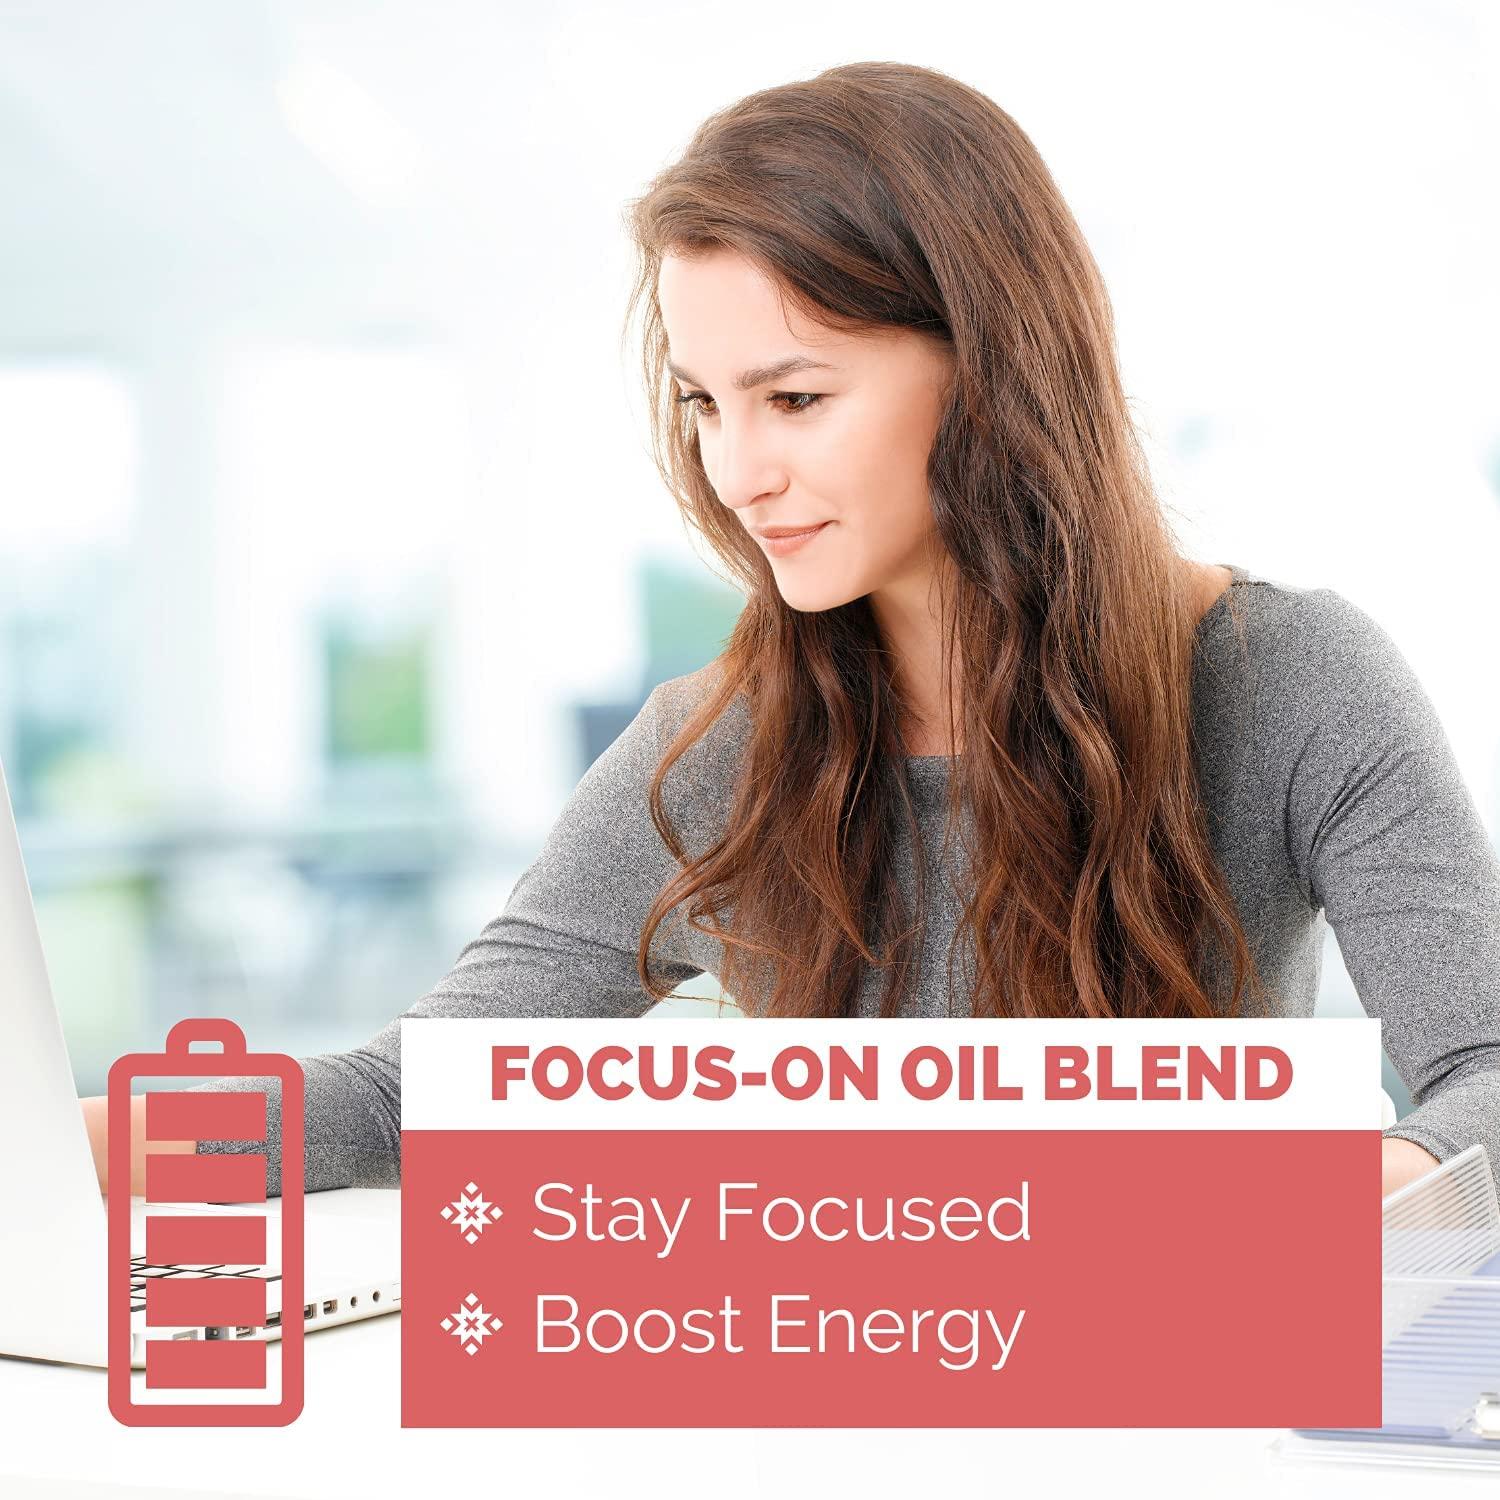 Benatu essential oils blend set, organic aromatherapy oils for diffuser  (stress, sleep, balance, theives, breathe) 5